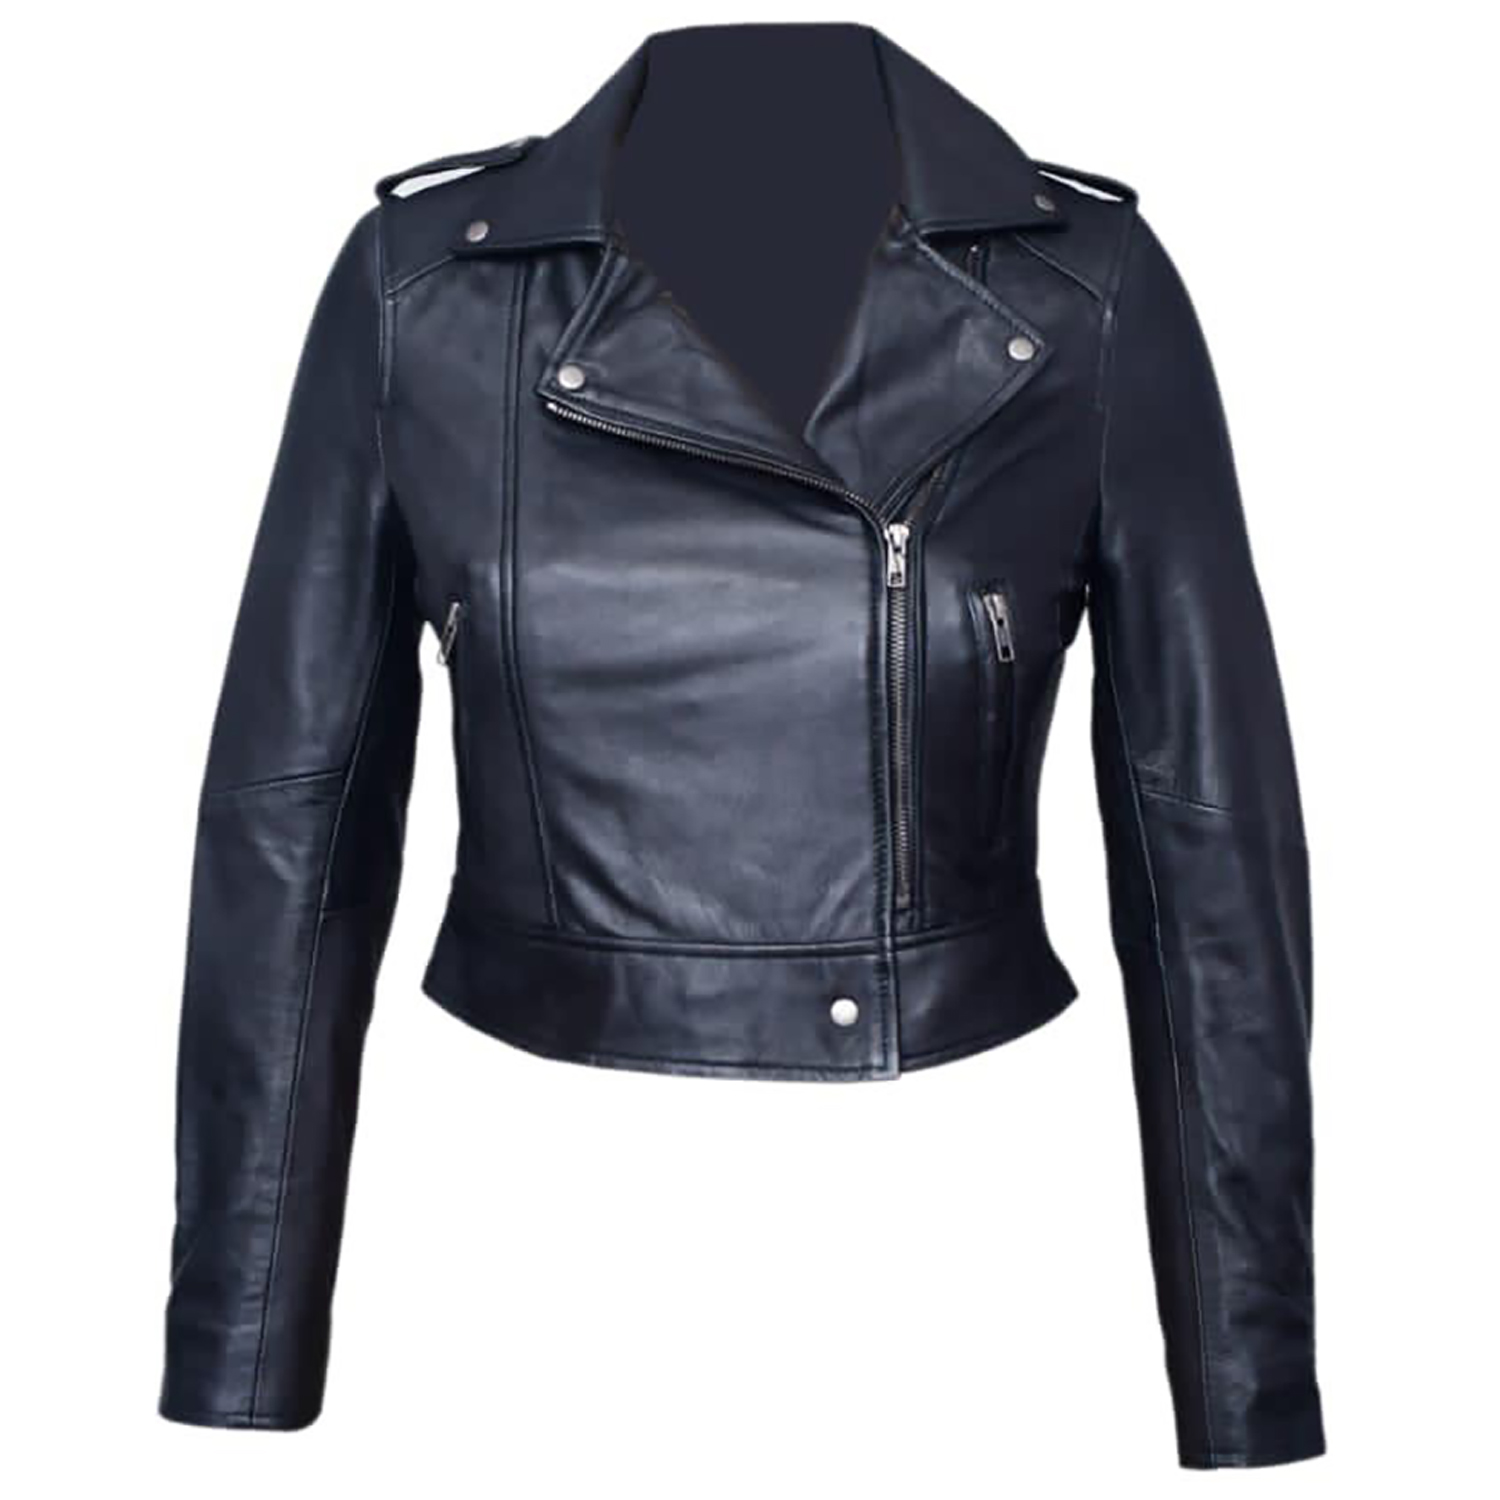 Hot selling Leather Jacket for Women  high quality sheepskin leather jacket